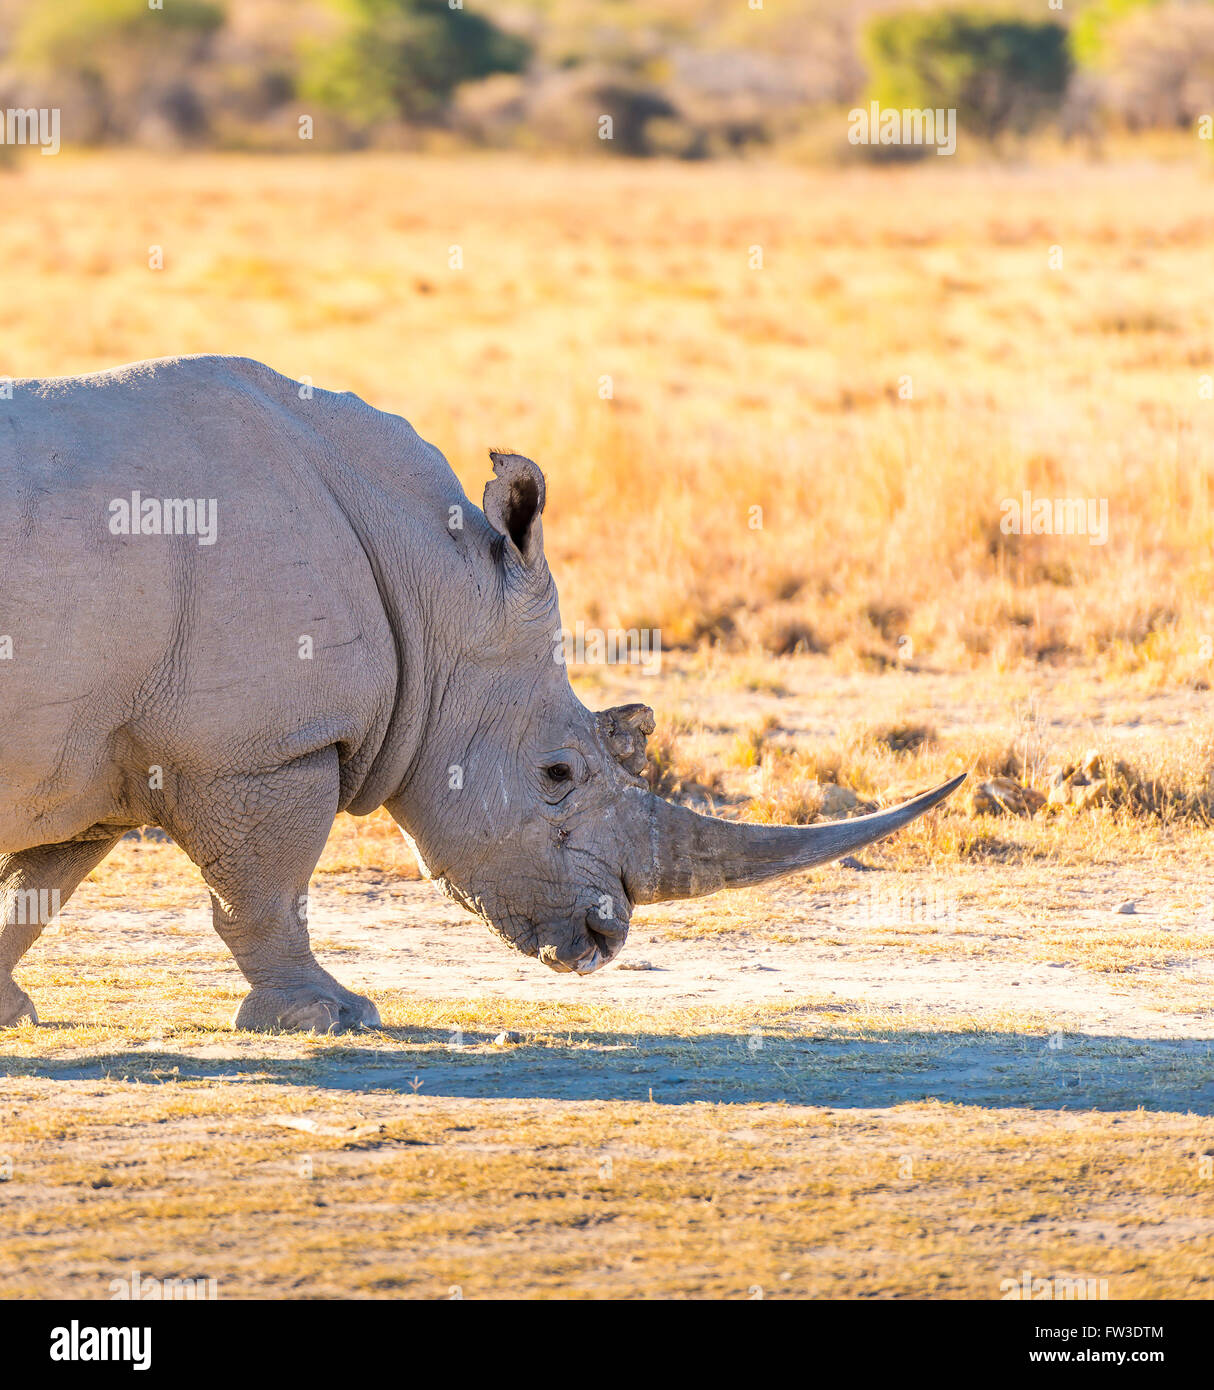 White Rhino or Rhinoceros while on safari in Botswana, Africa Stock Photo